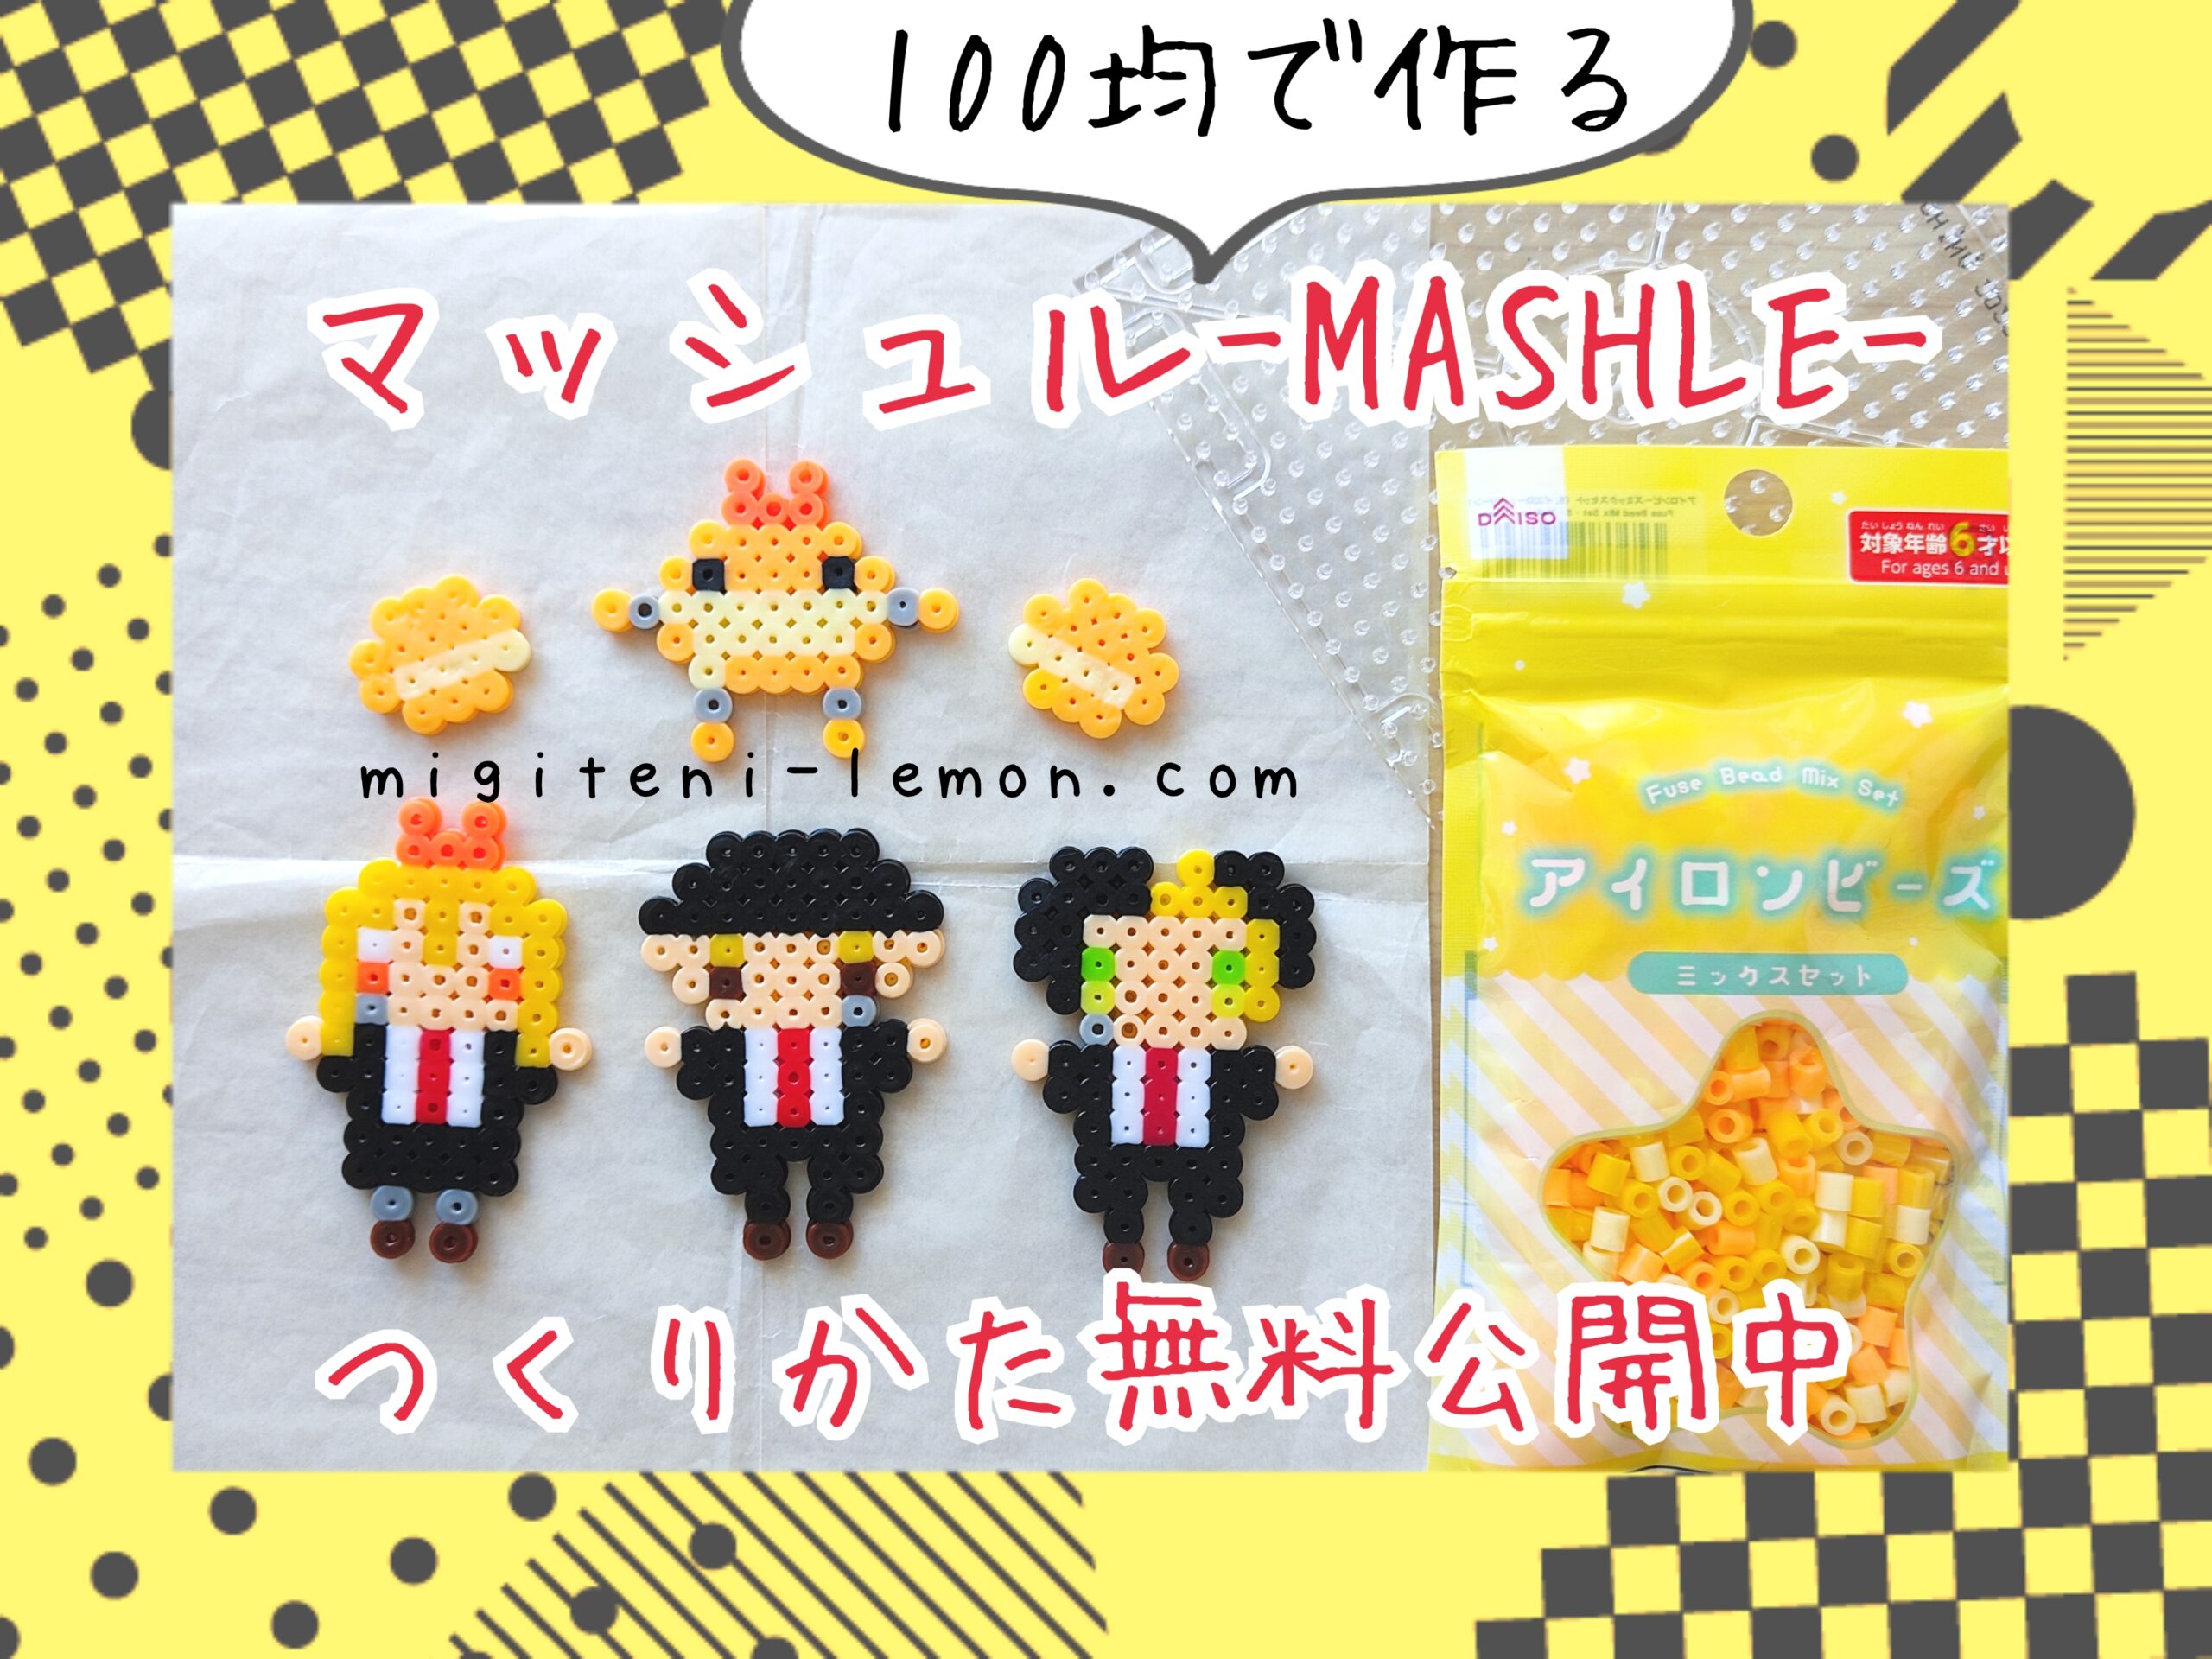 mashle-anime-comic-kawaii-beads-handmade